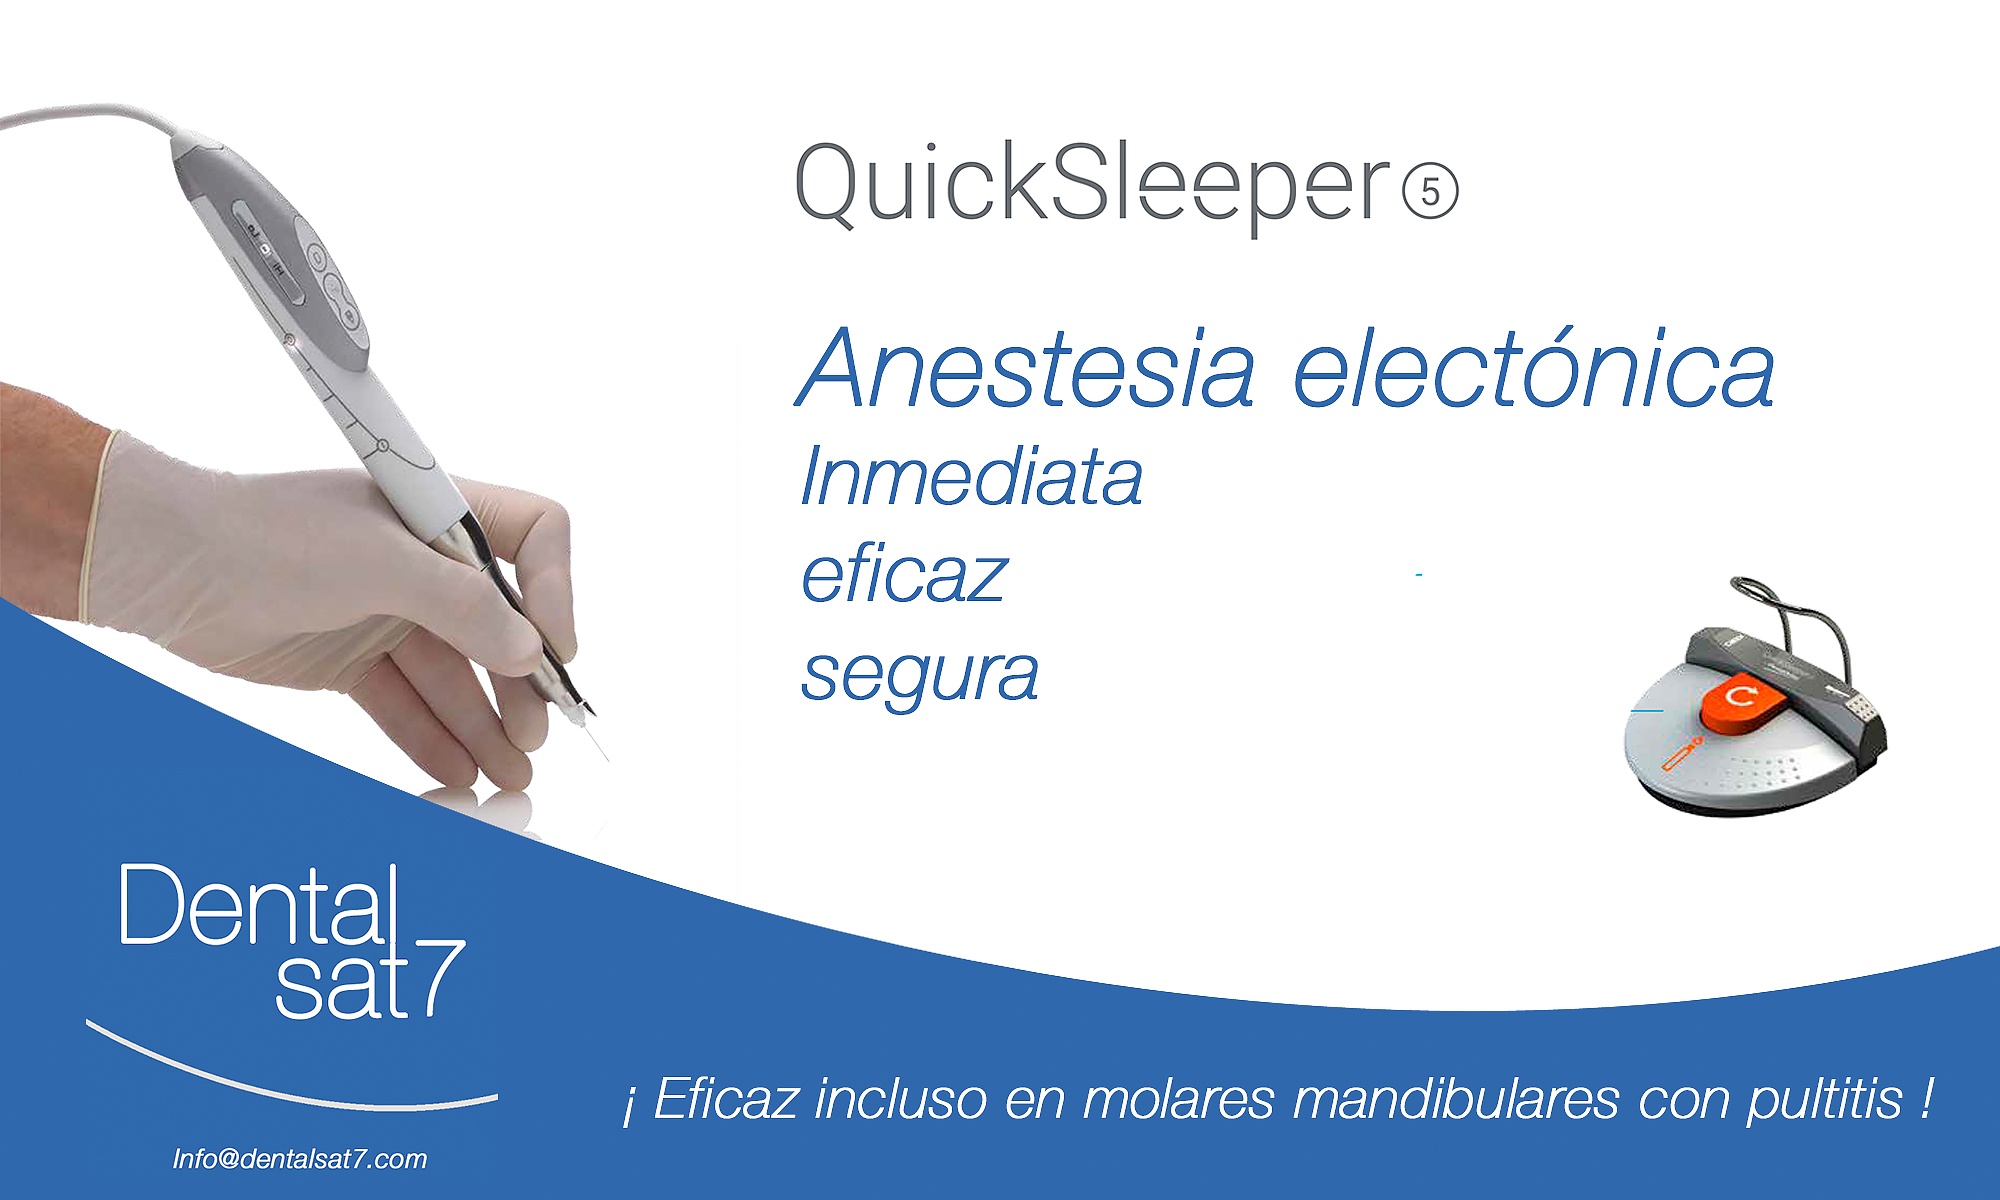 Quicksleeper anestesia inmediata